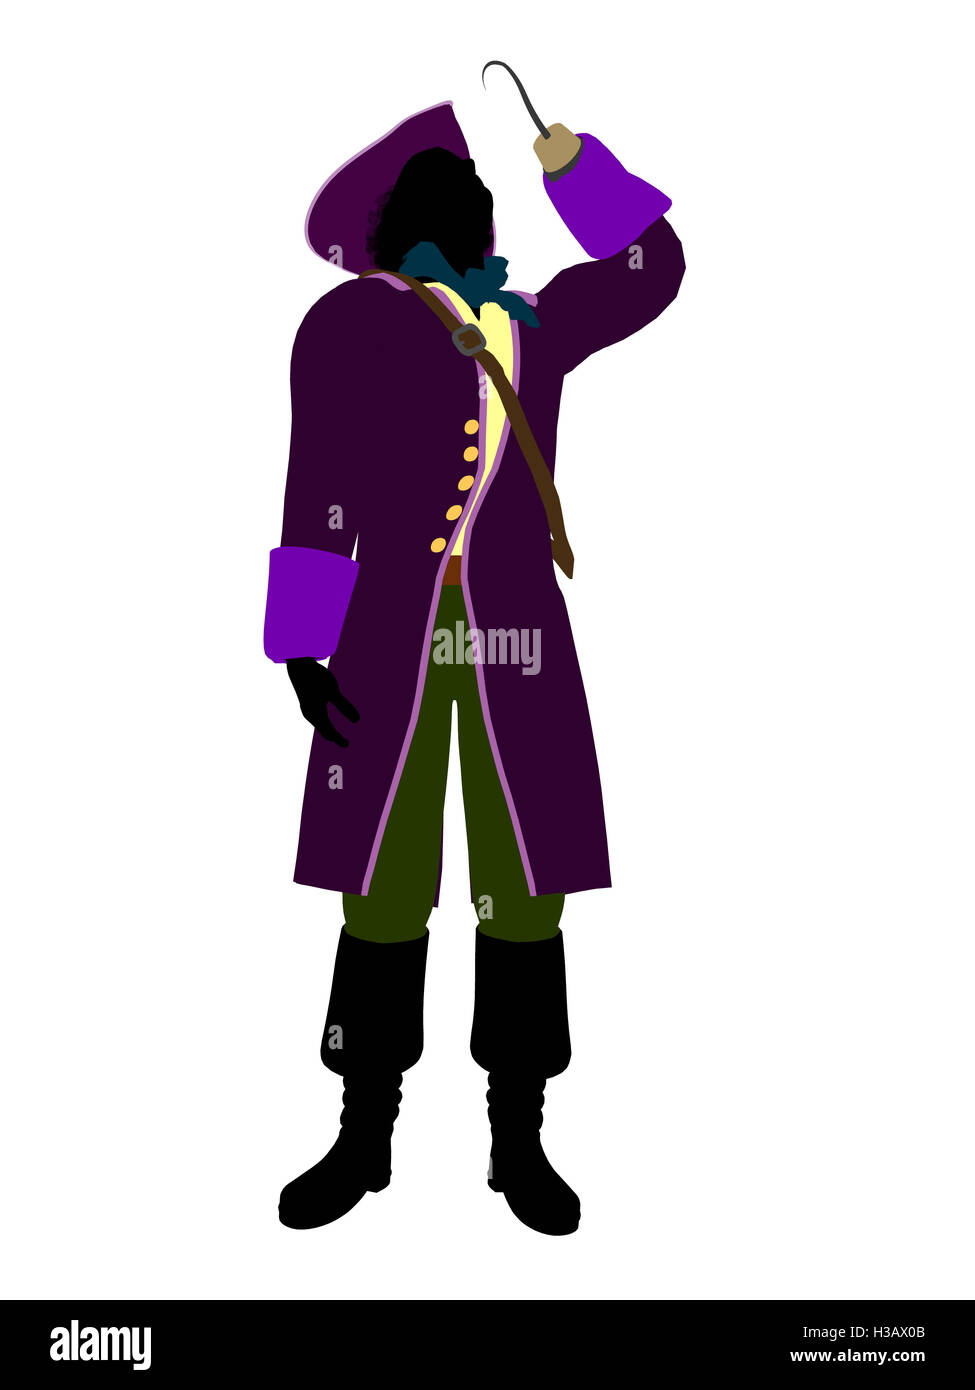 Captain Hook Silhouette Illustration Stock Photo